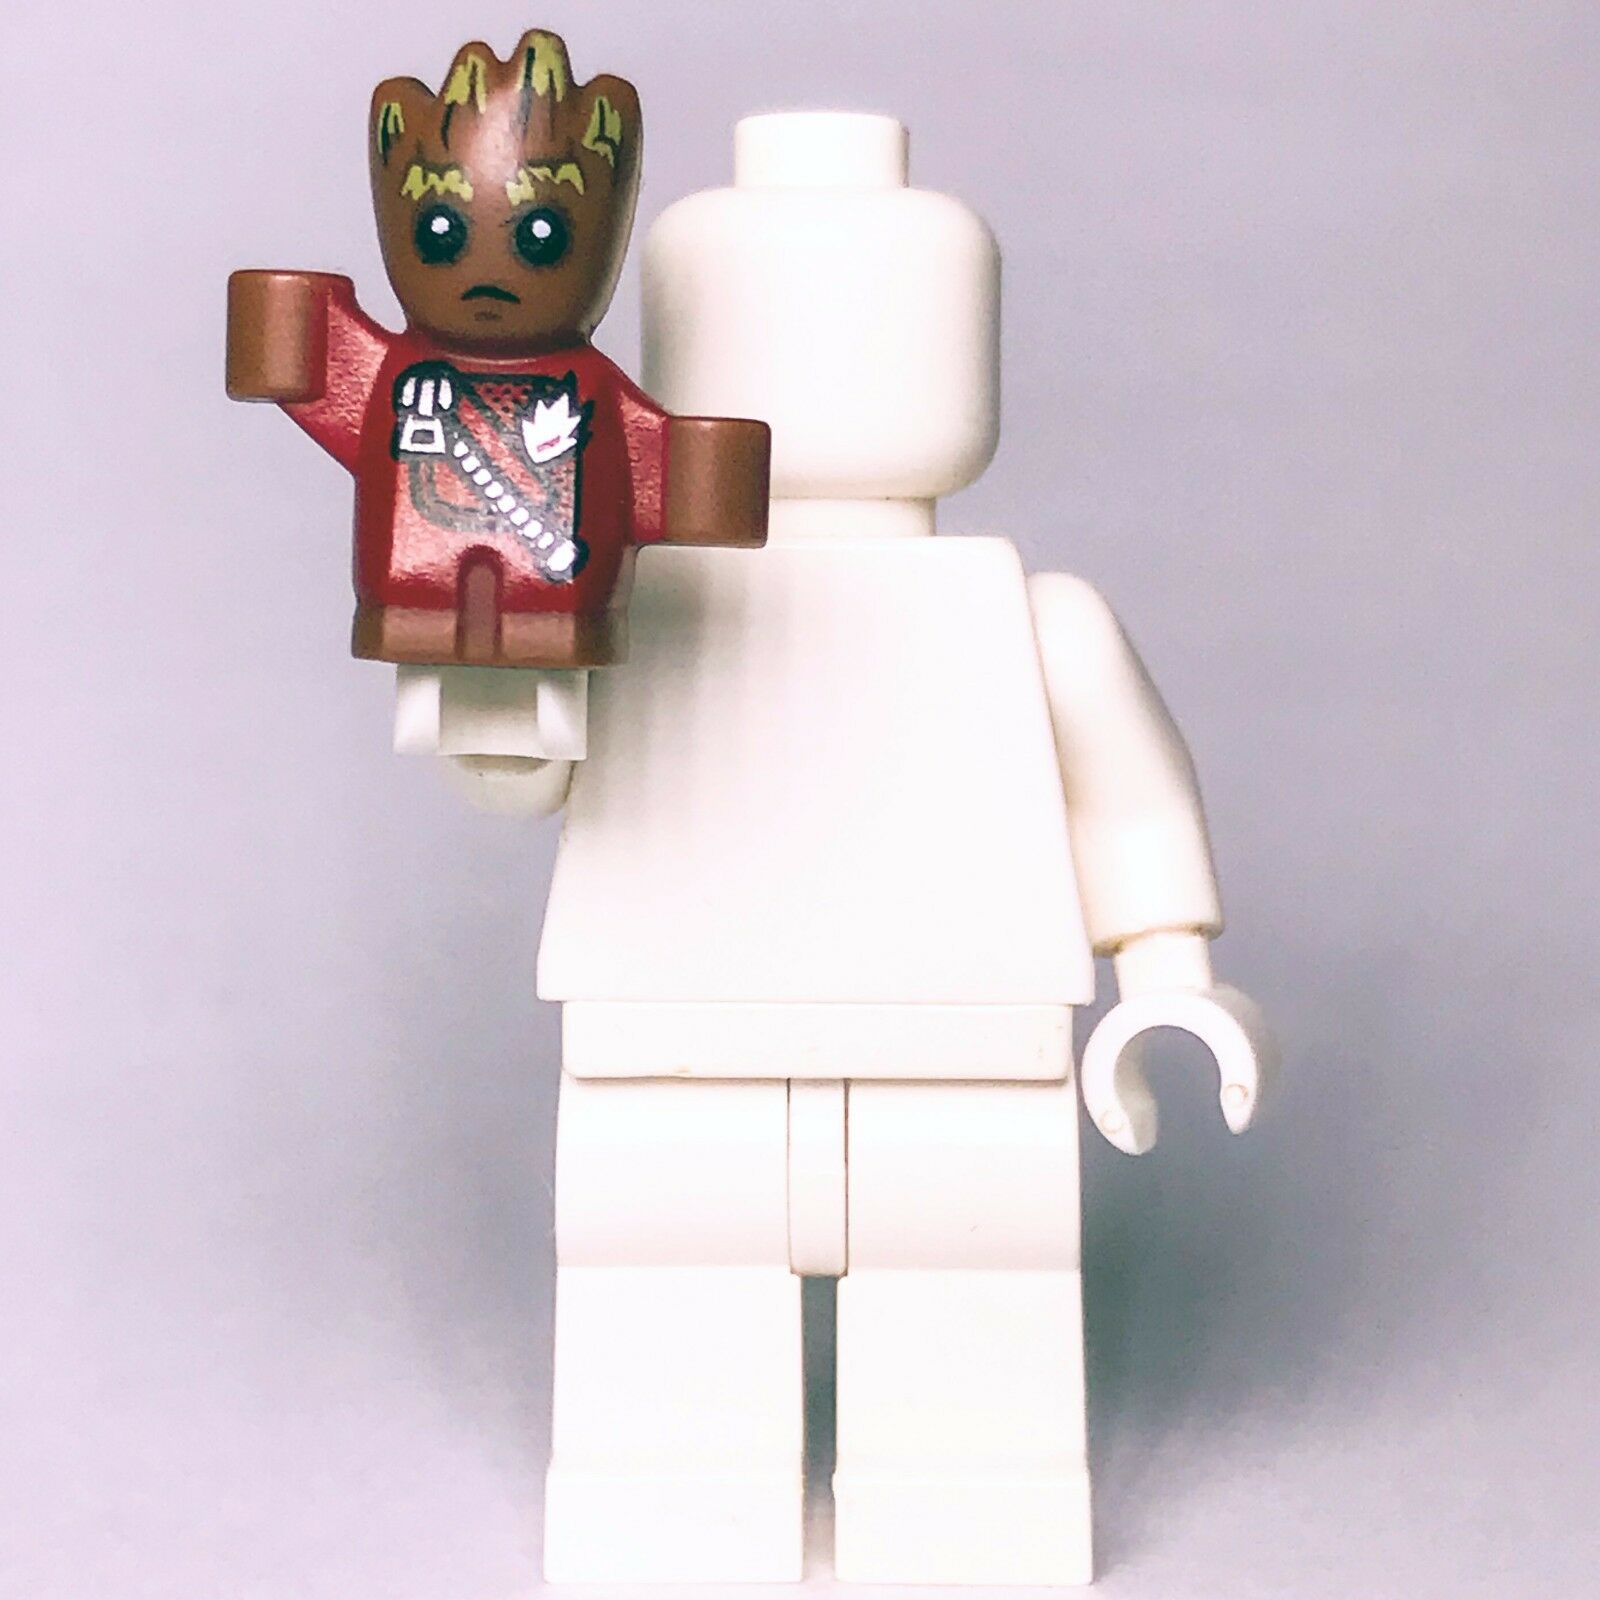 New Marvel Super Heroes LEGO Baby Groot Guardian of the Galaxy Minifigure 76080 - Bricks & Figures